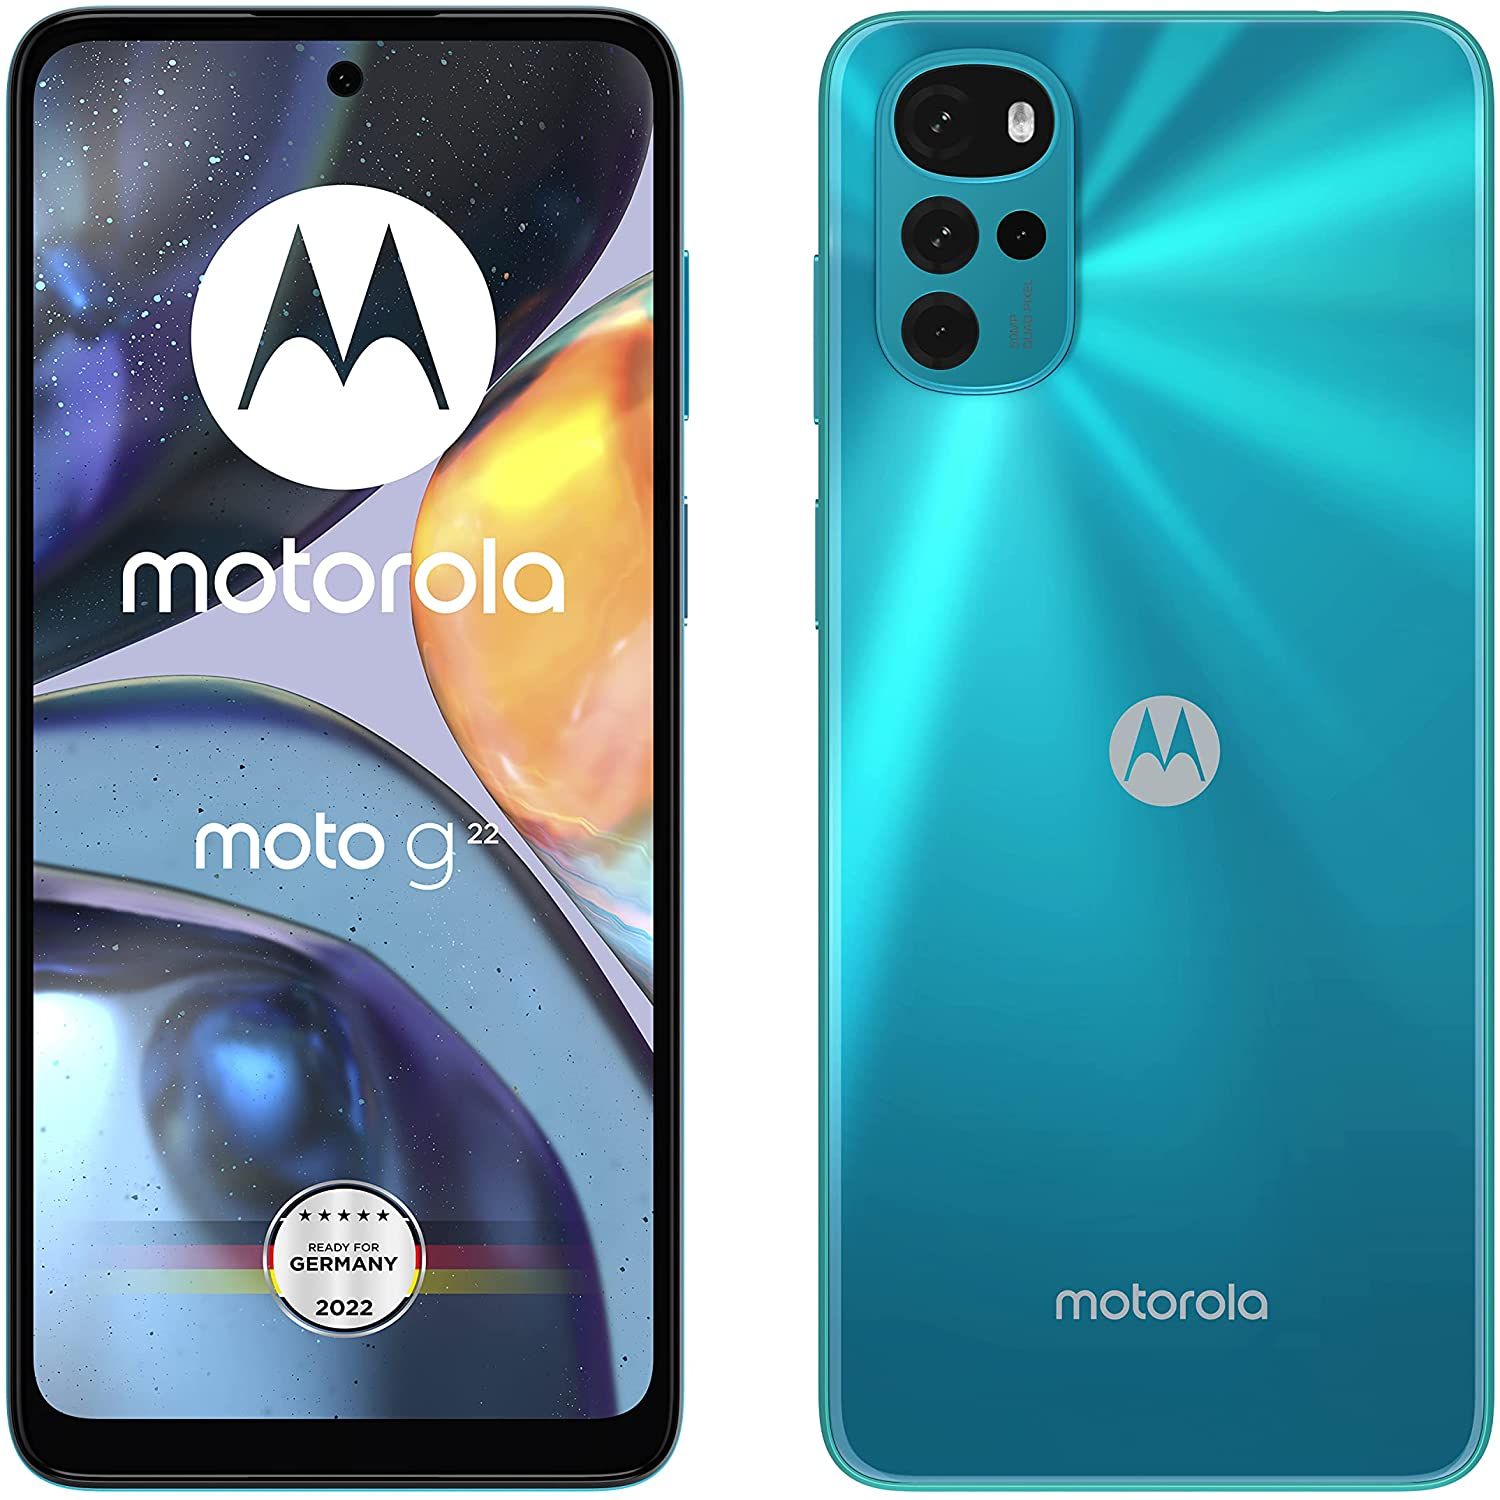 Motorola moto g22 16.5 cm (6.5